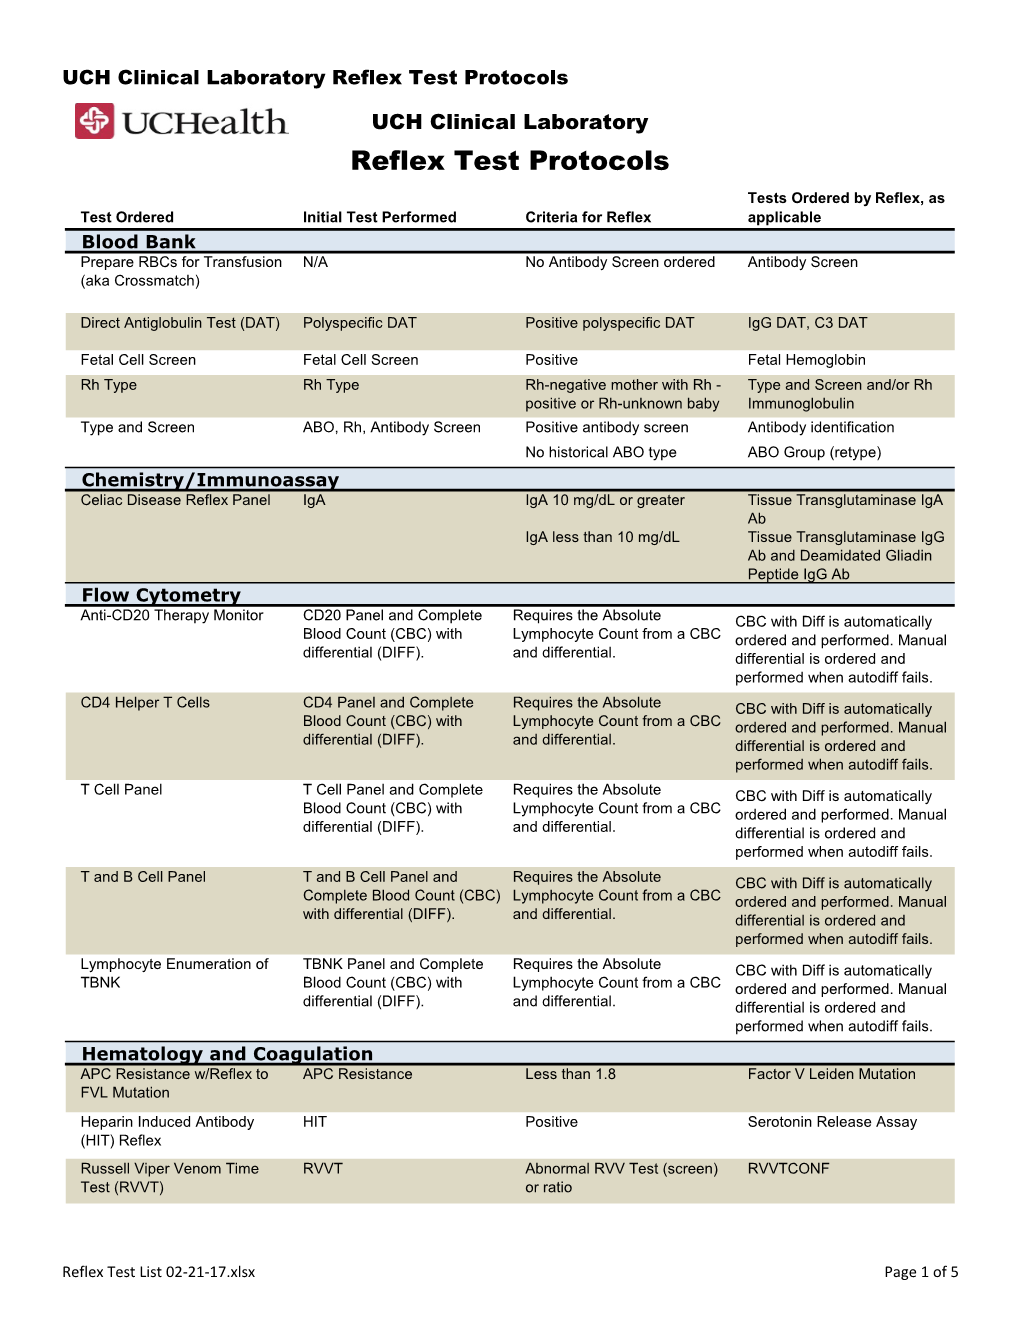 Reflex Test Protocols